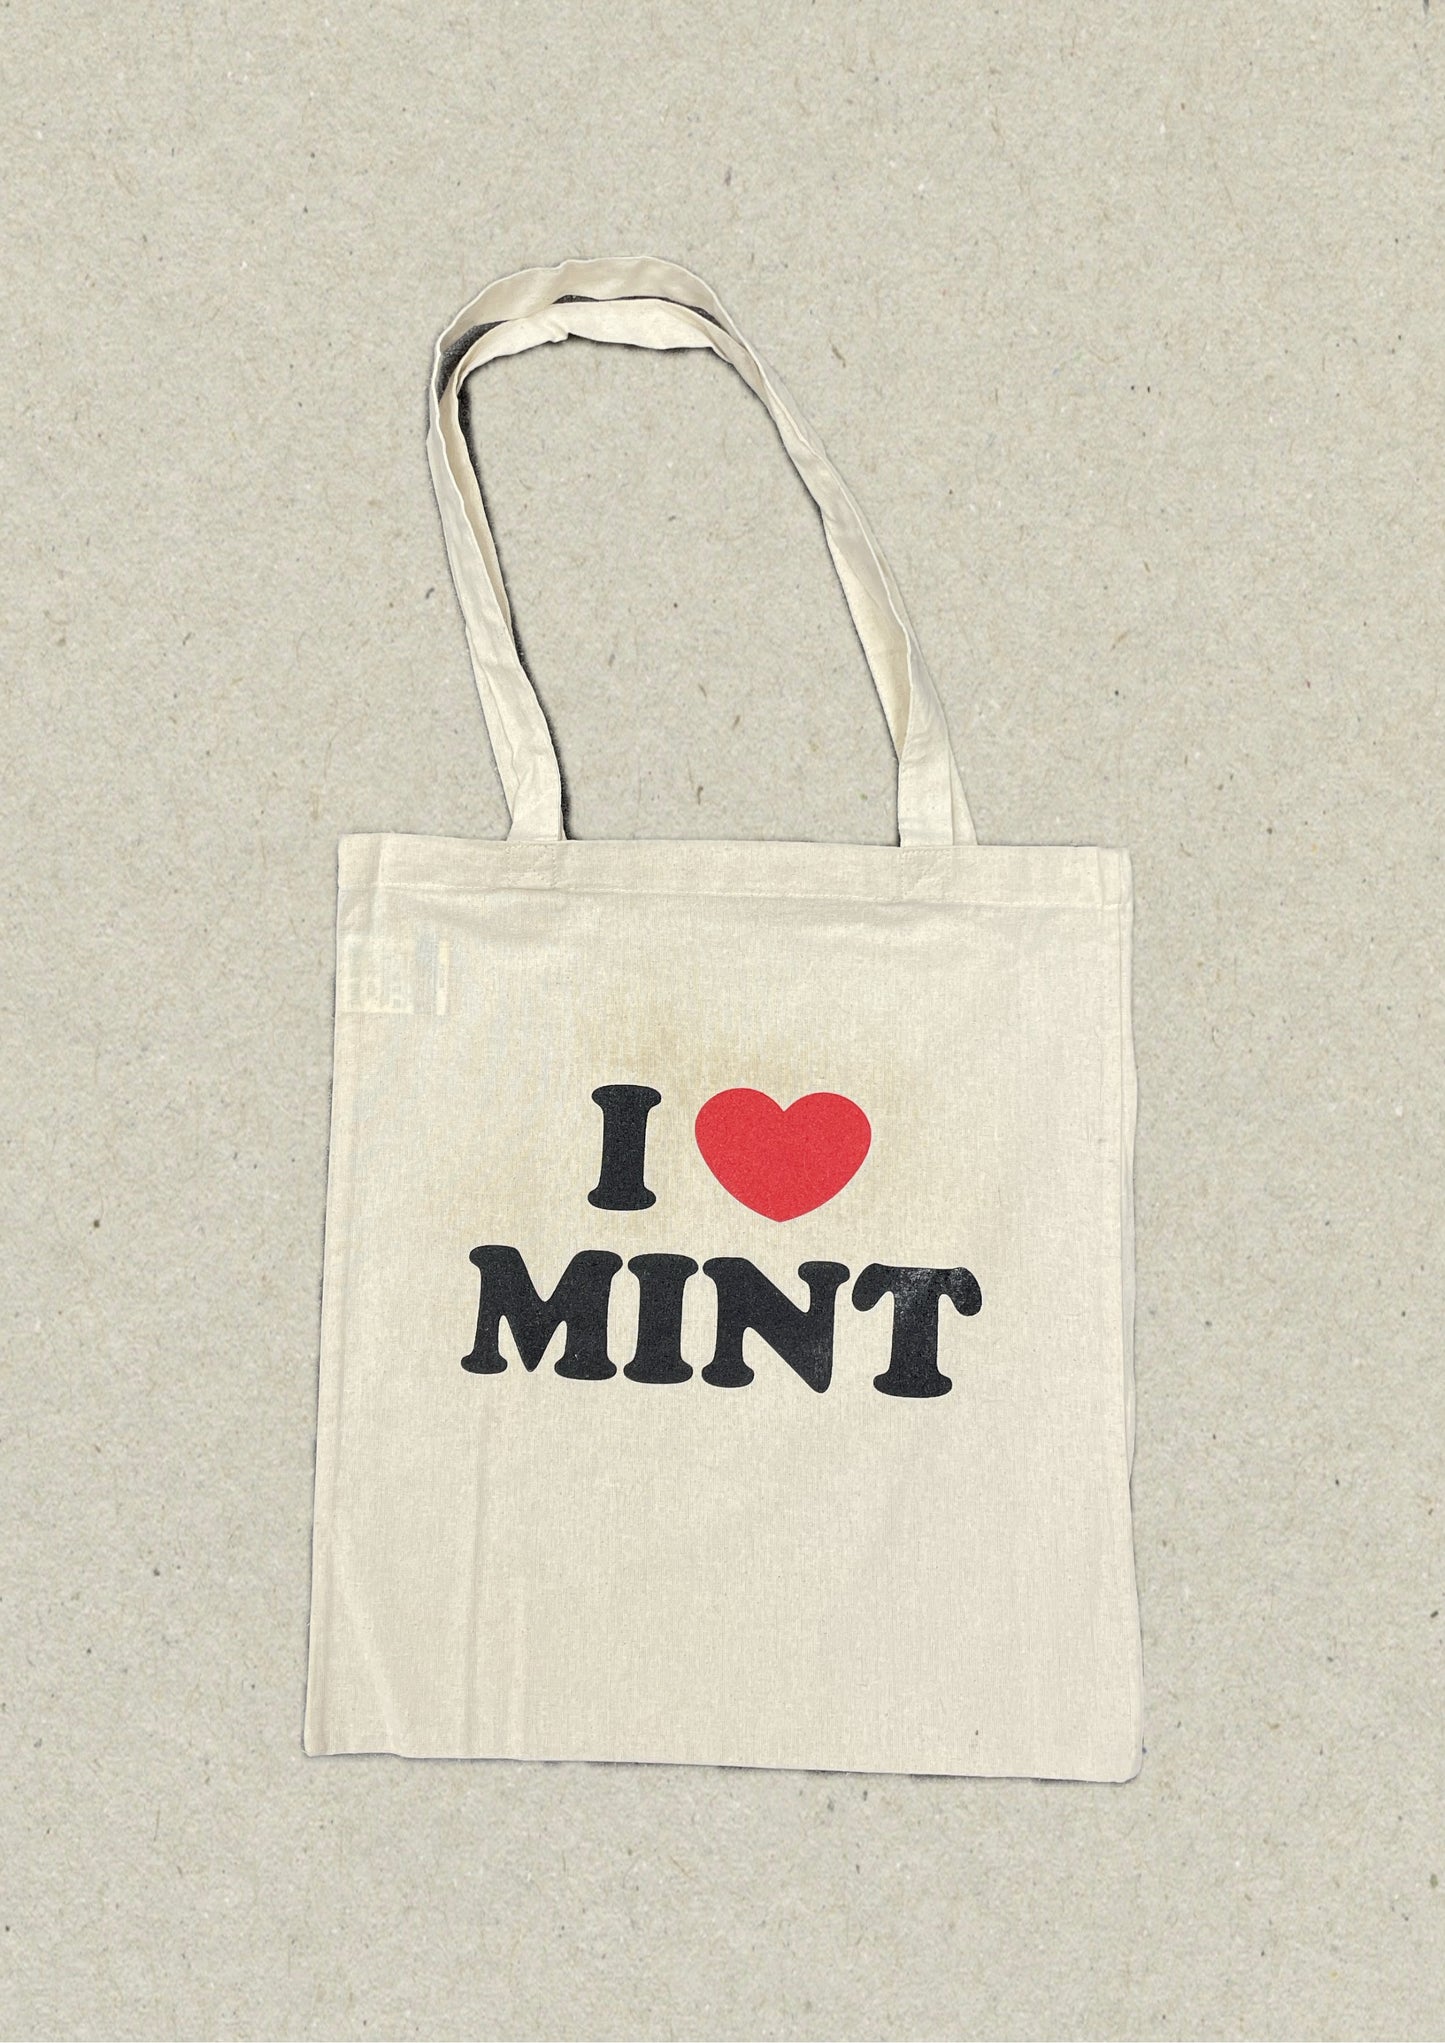 I HEART MINT tote bag redheart - mint